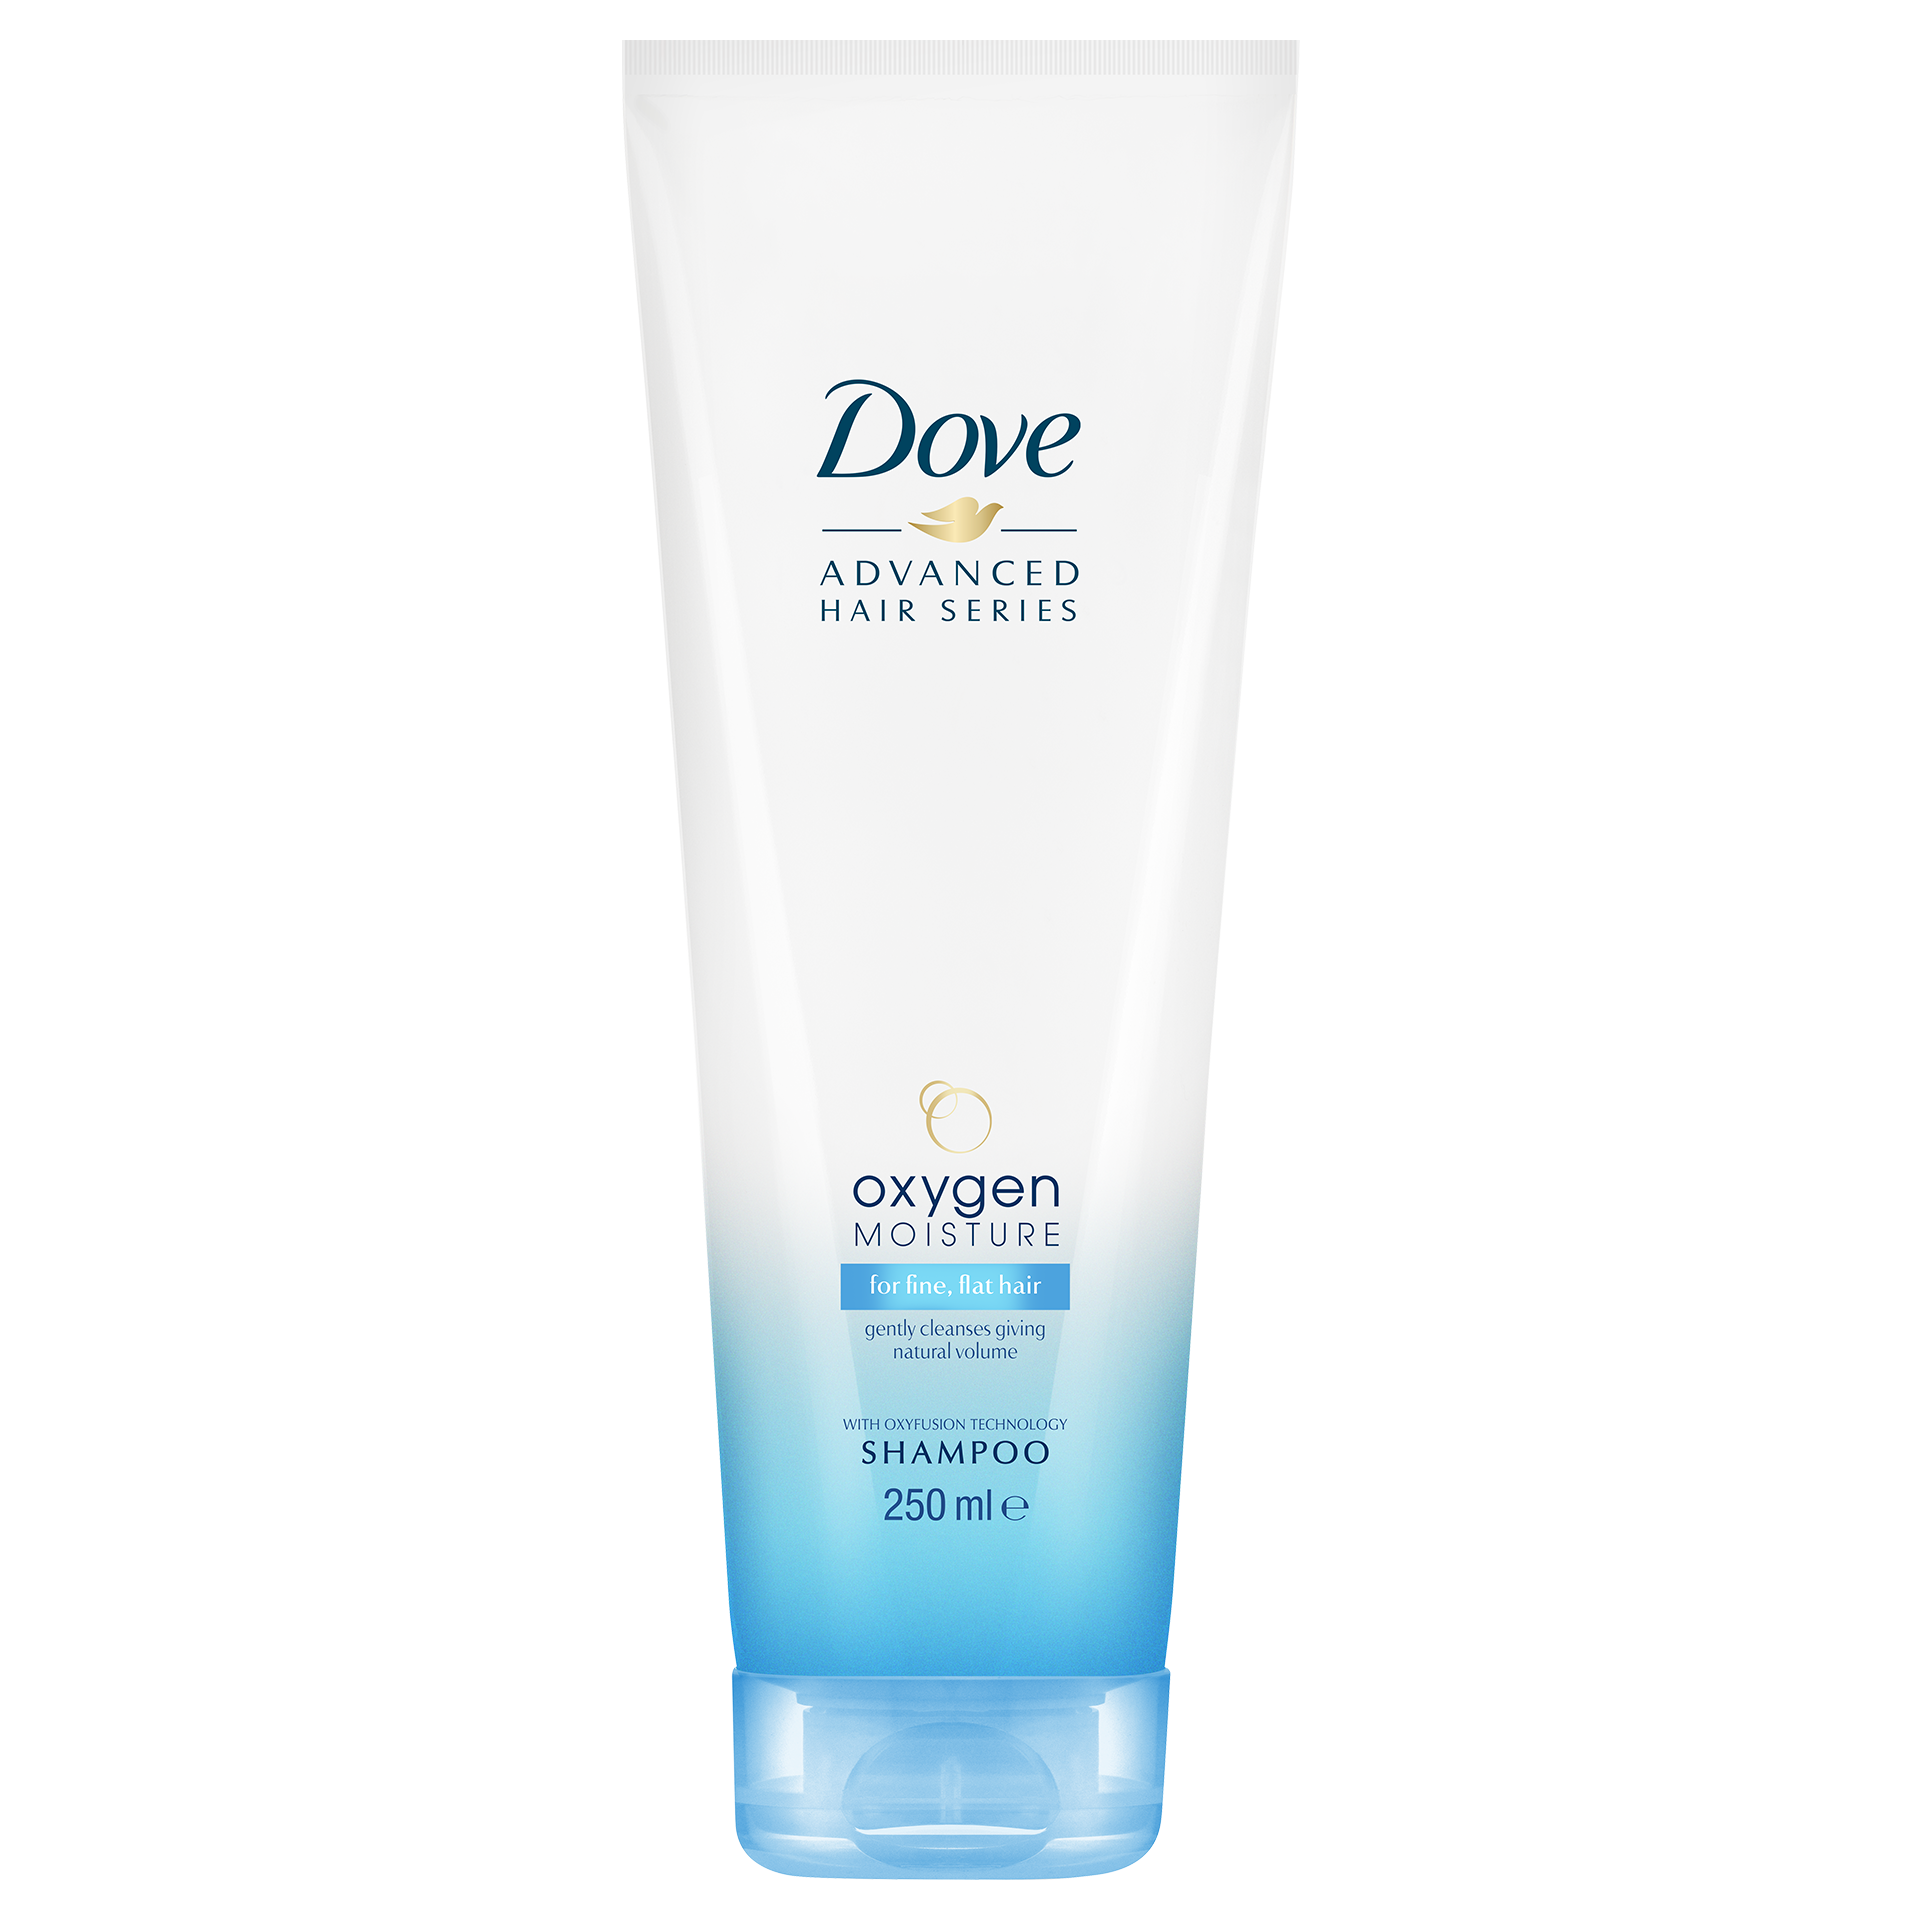 szampon dove oxygen moisture wizaz